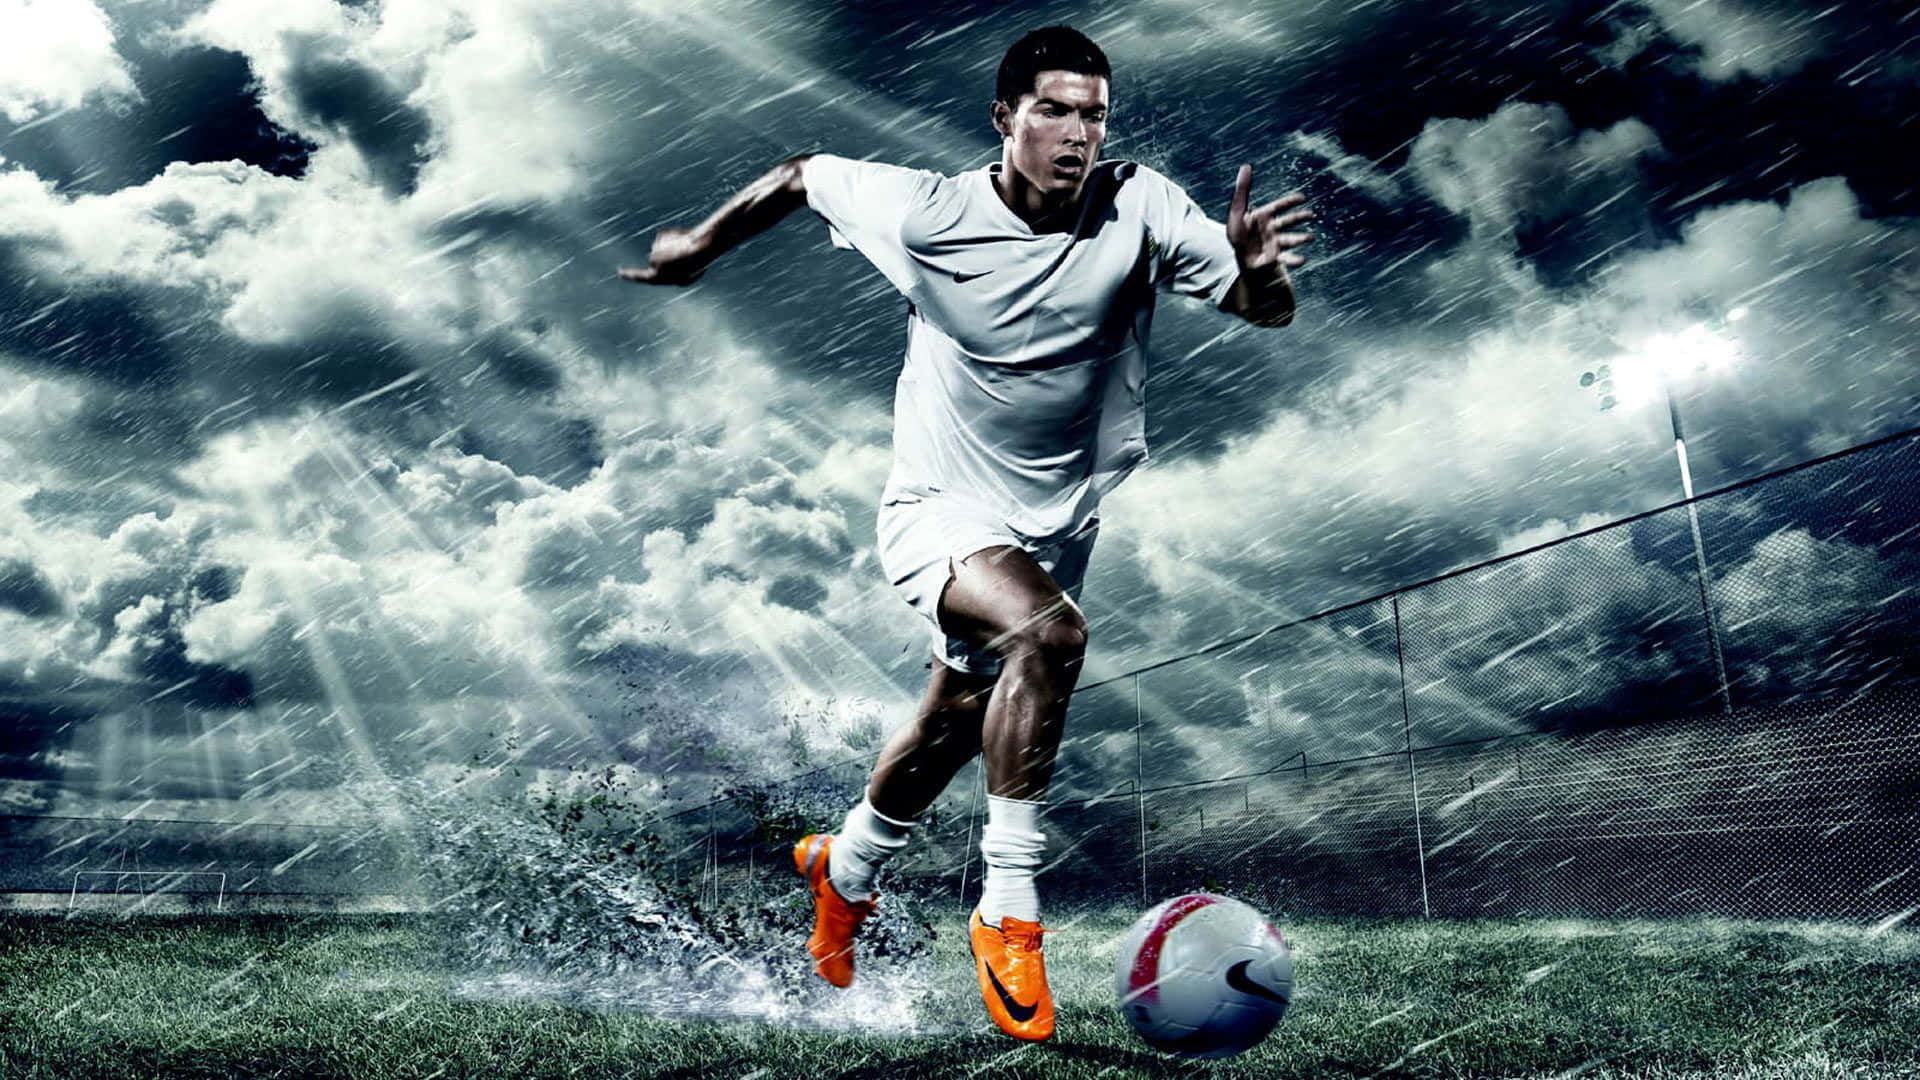 Portuguese soccer superstar, Ronaldo